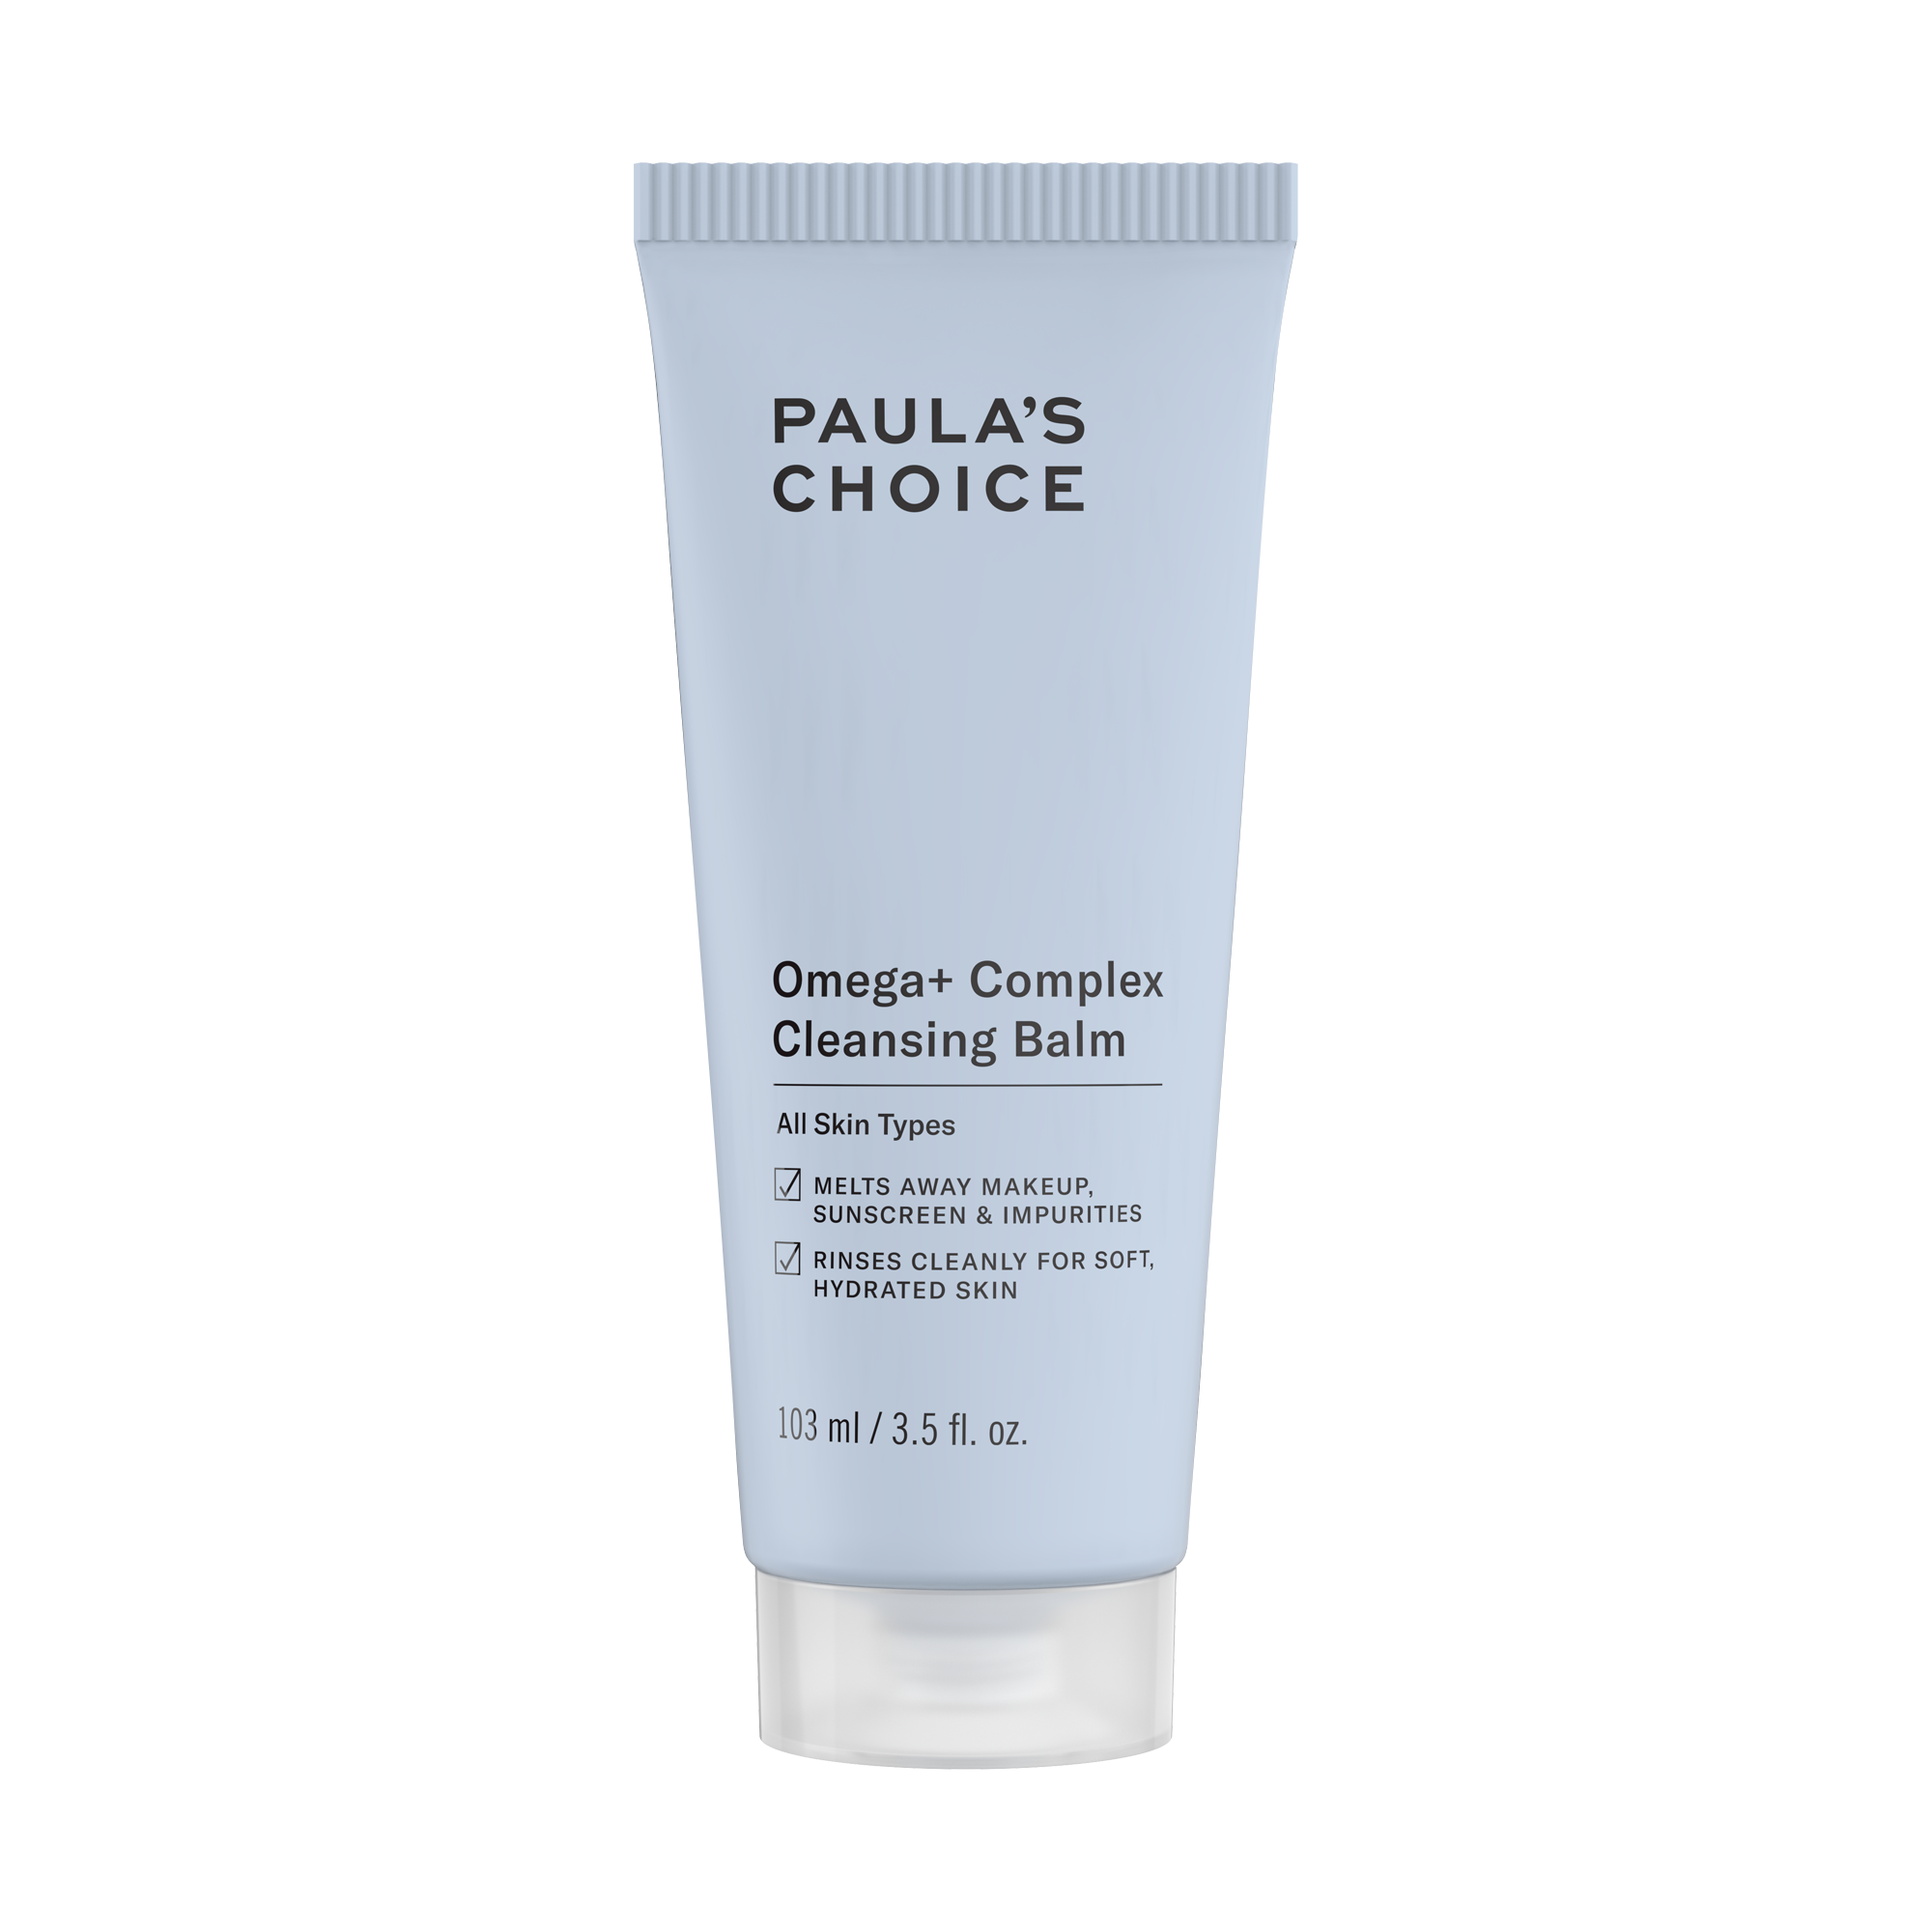 Omega+ Complex Cleansing Balm | Paula's Choice